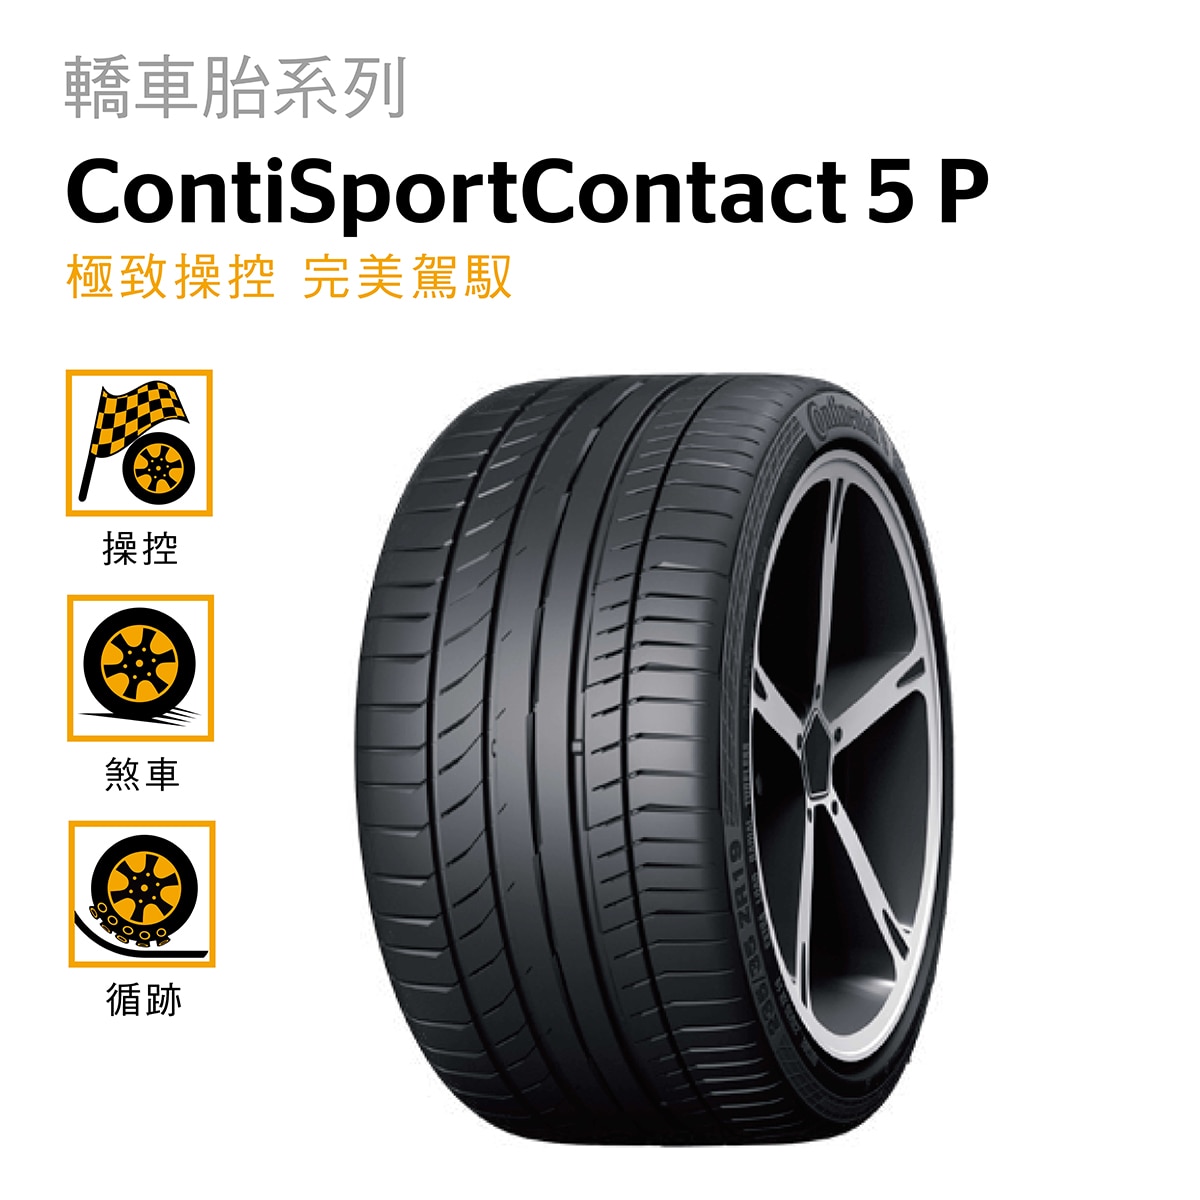 Continental 馬牌輪胎Conti Sport Contact 5P 適用於高性能與豪華轎車，優異的彎道抓地力與全天候更短的煞車距離，大大提高行駛安全性。